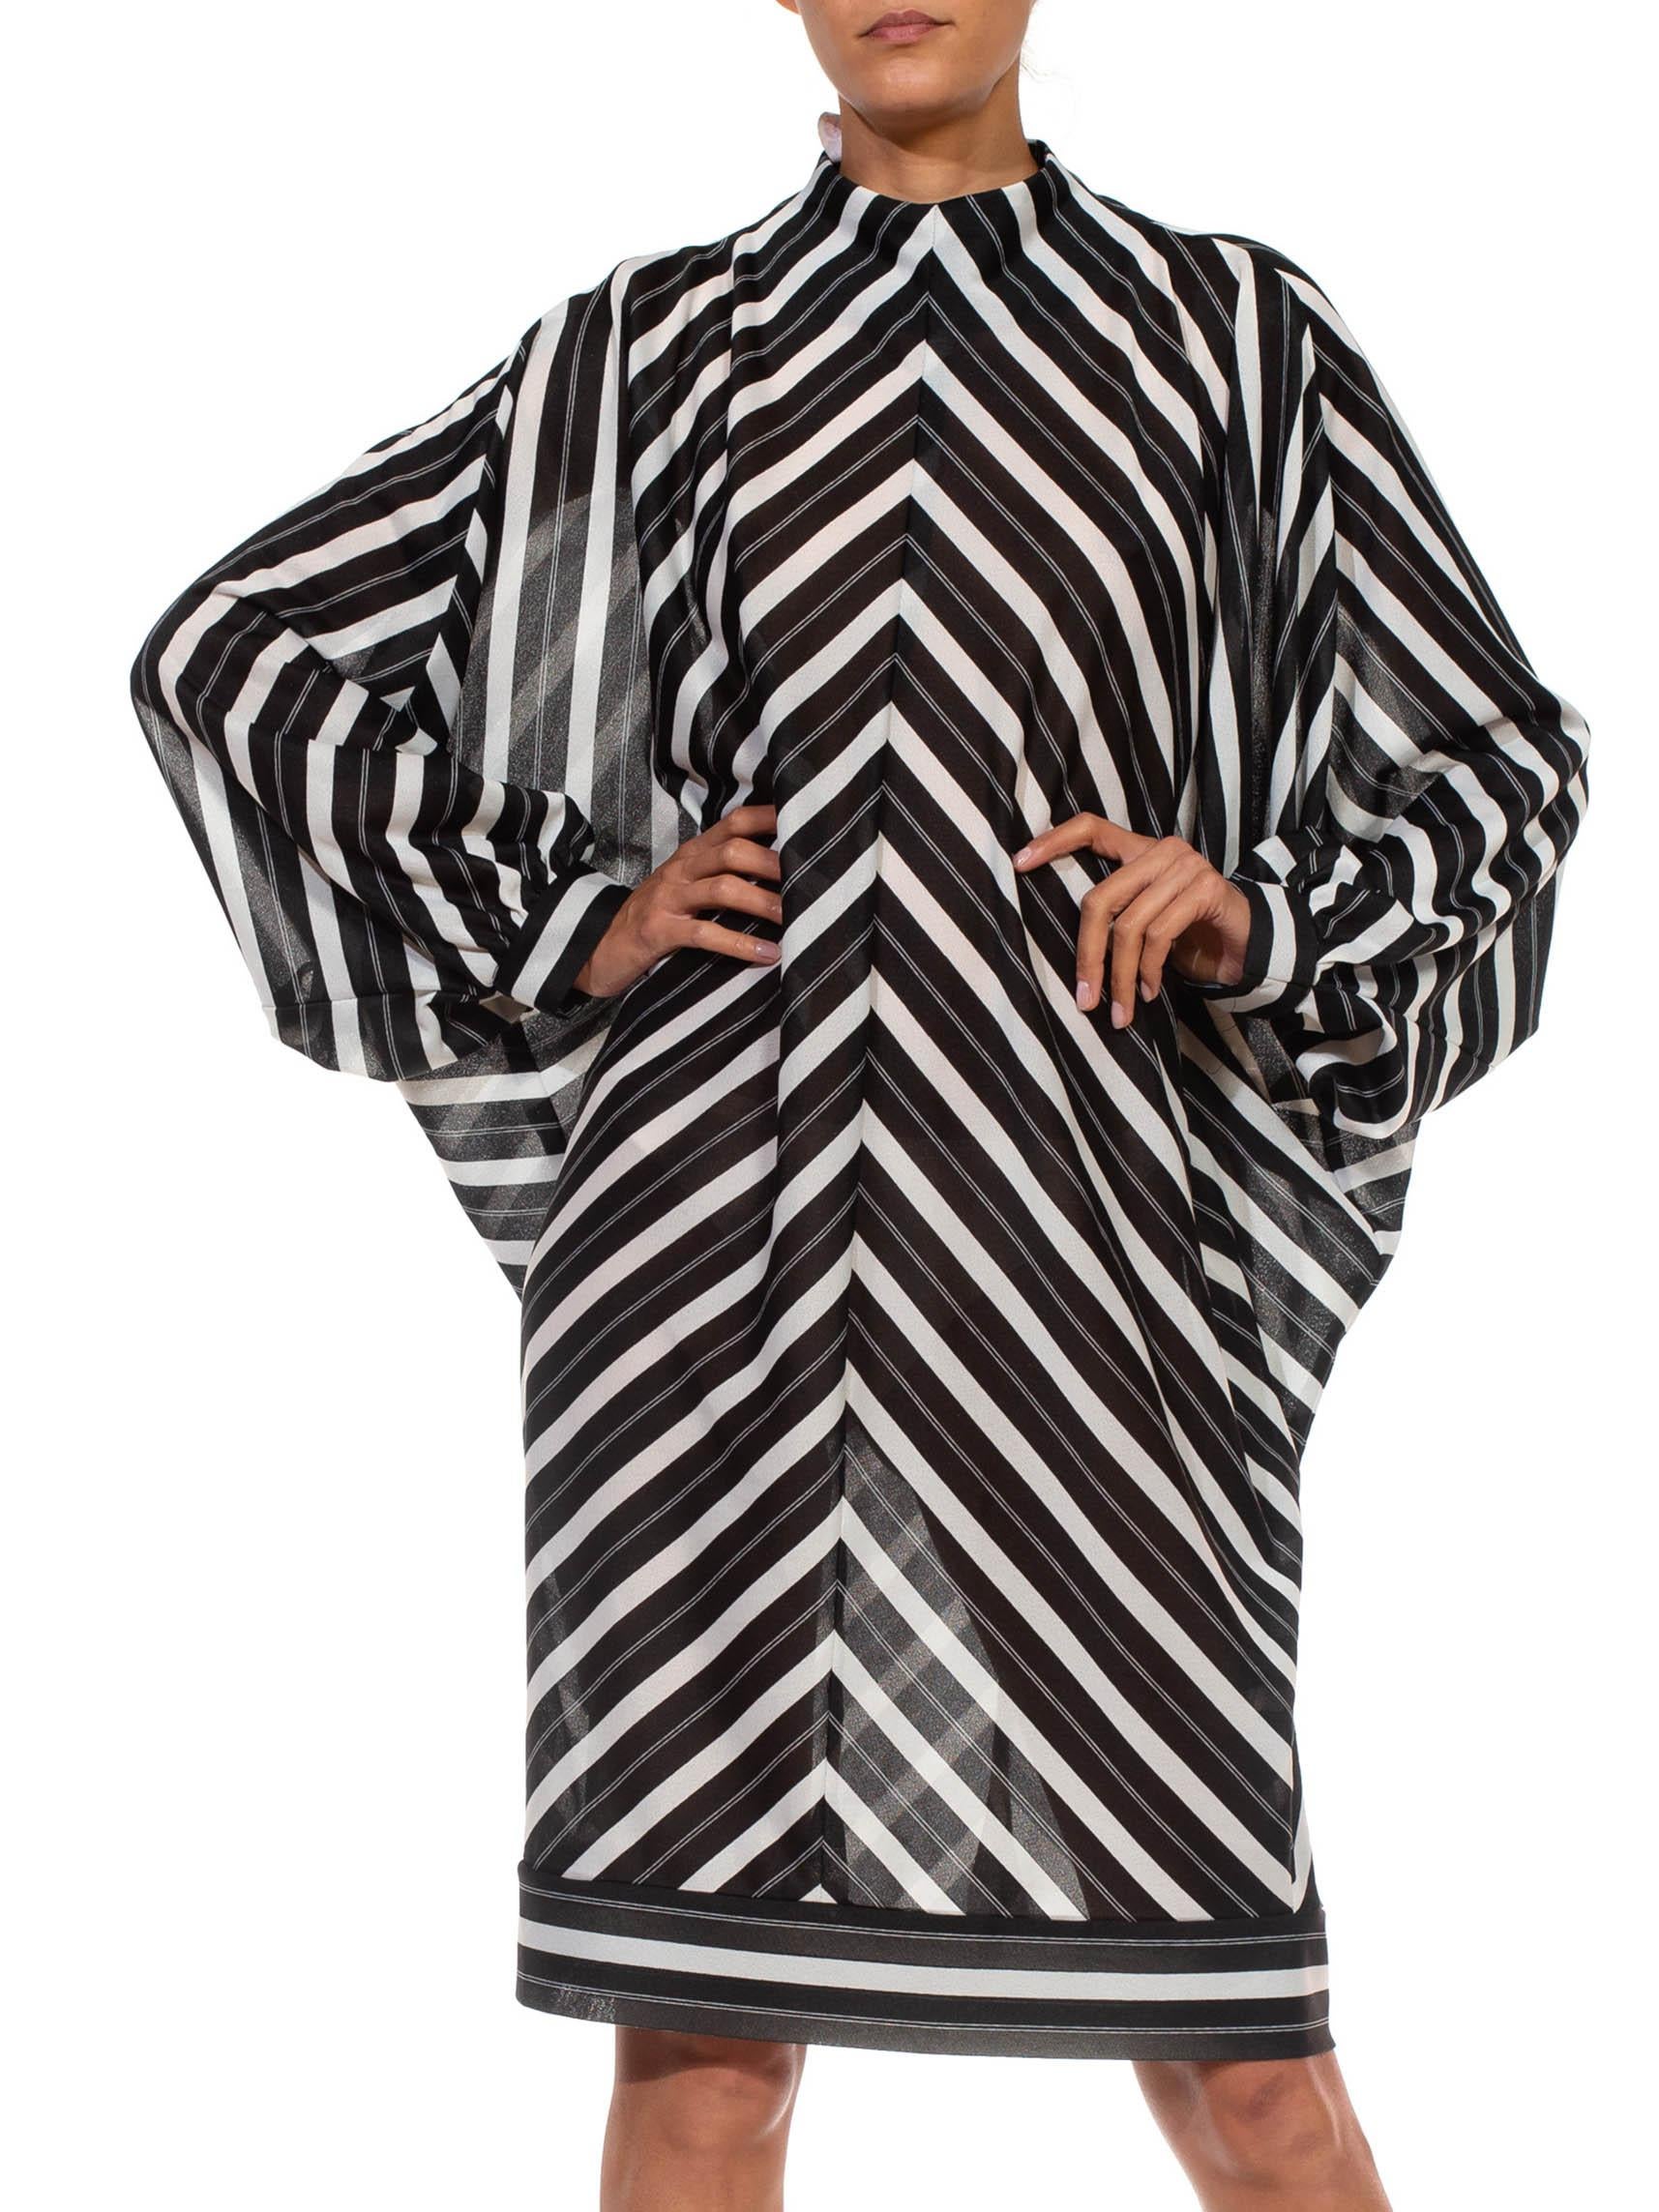 Women's 1960S Black & White Poly Blend Striped, Dolman Sleeve Dress For Sale